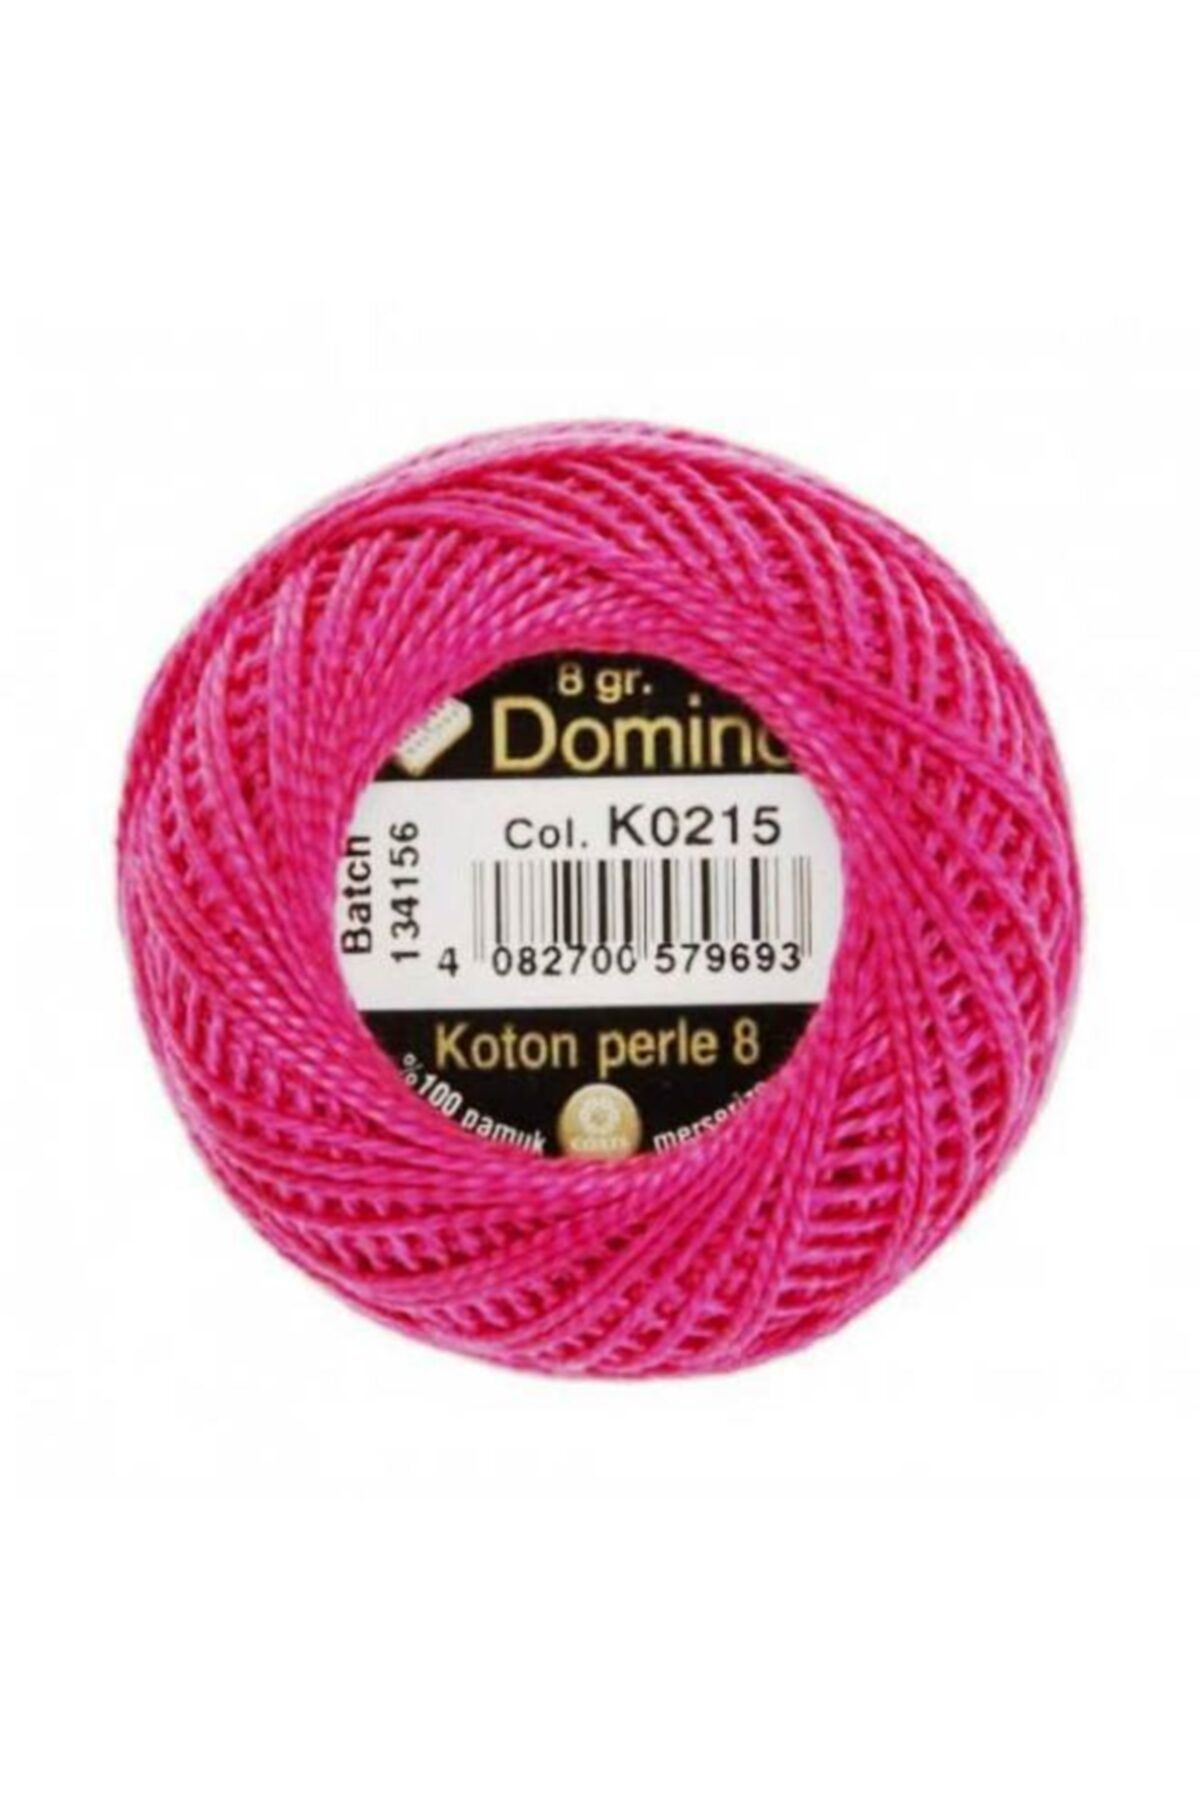 Coats Domino Koton Perle no:8 K0215